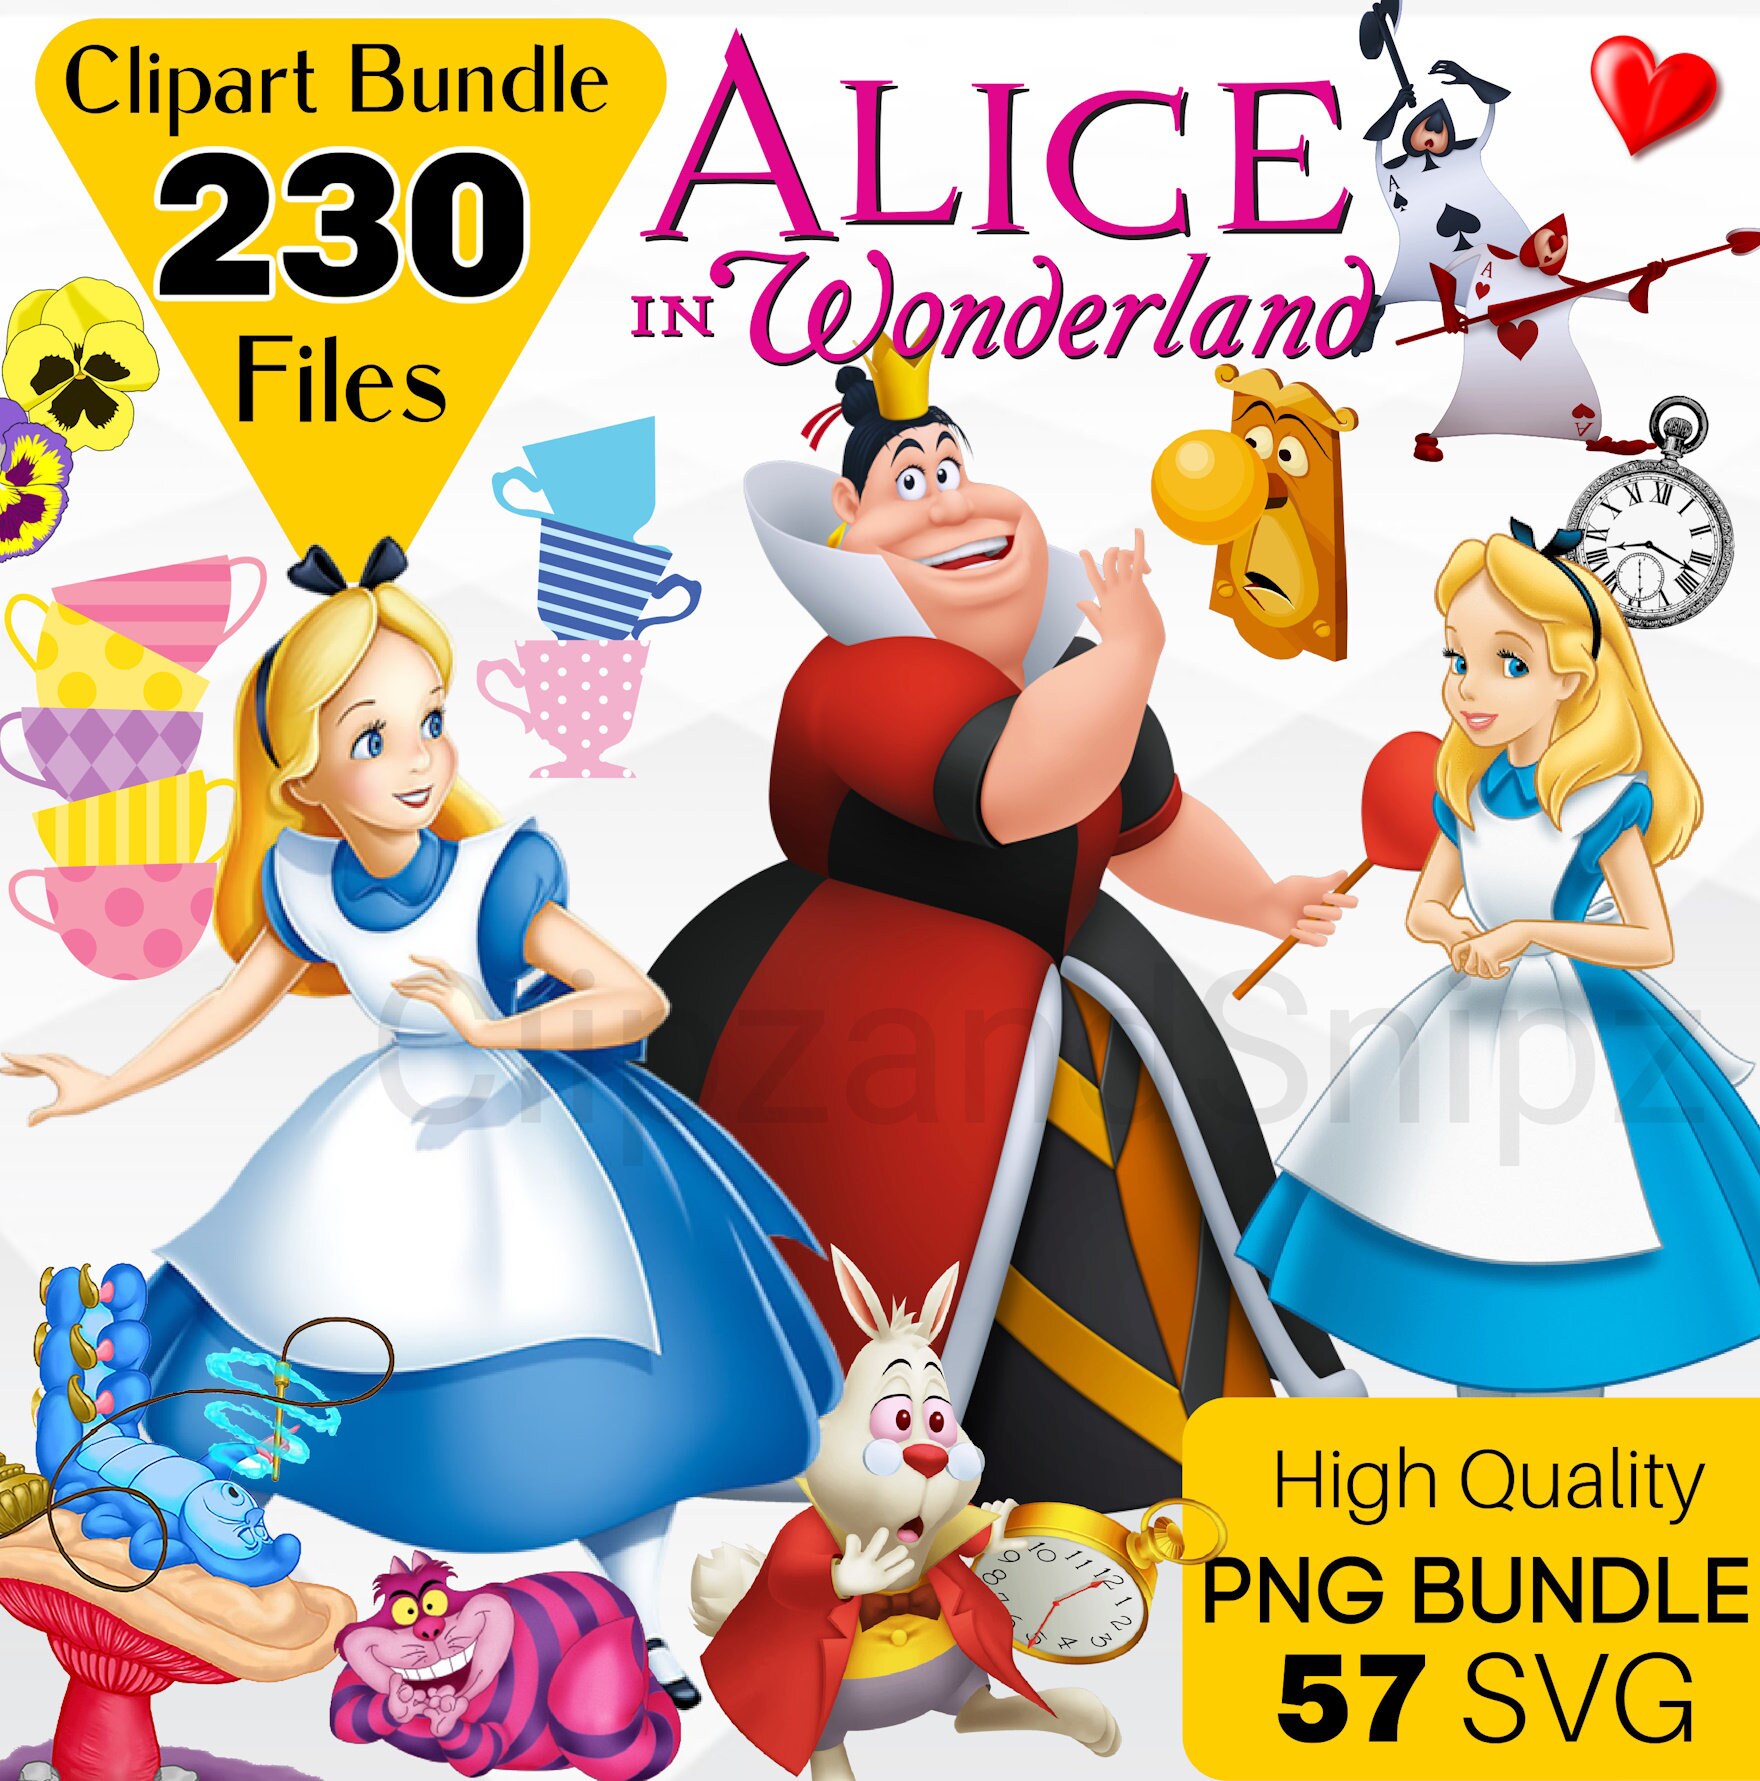 Alice in Wonderland (1951) Walt Disney cartoon movie poster reprint 18x12  inches approx.